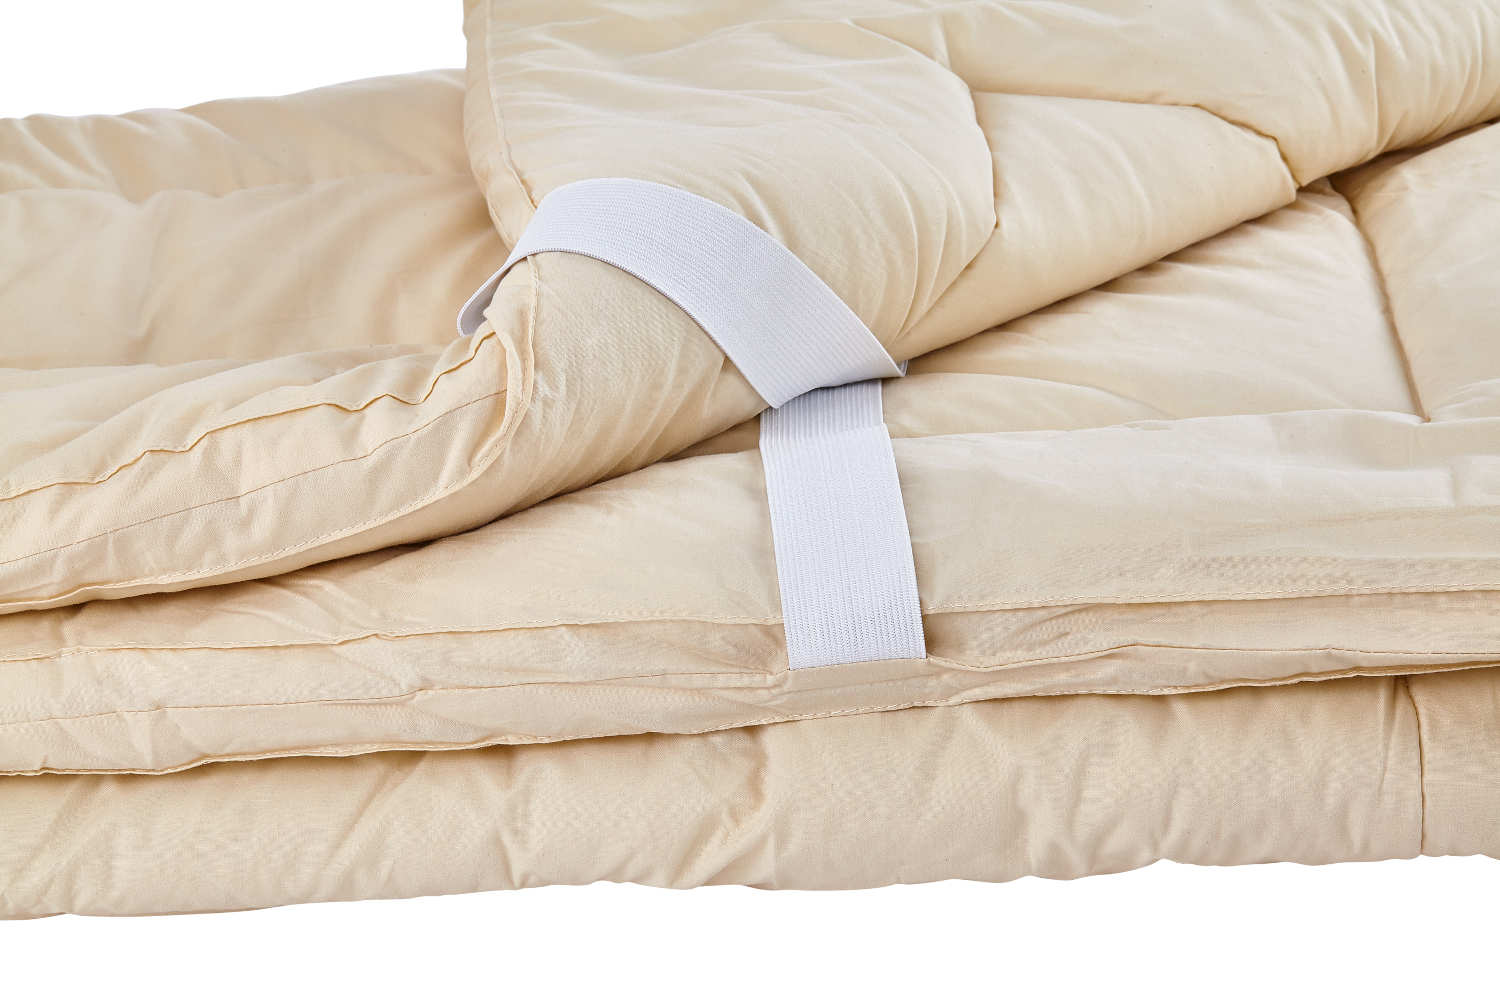 Sleep & Beyond myMerino Comforter Light, Organic Merino Wool Comforter, King 102x90